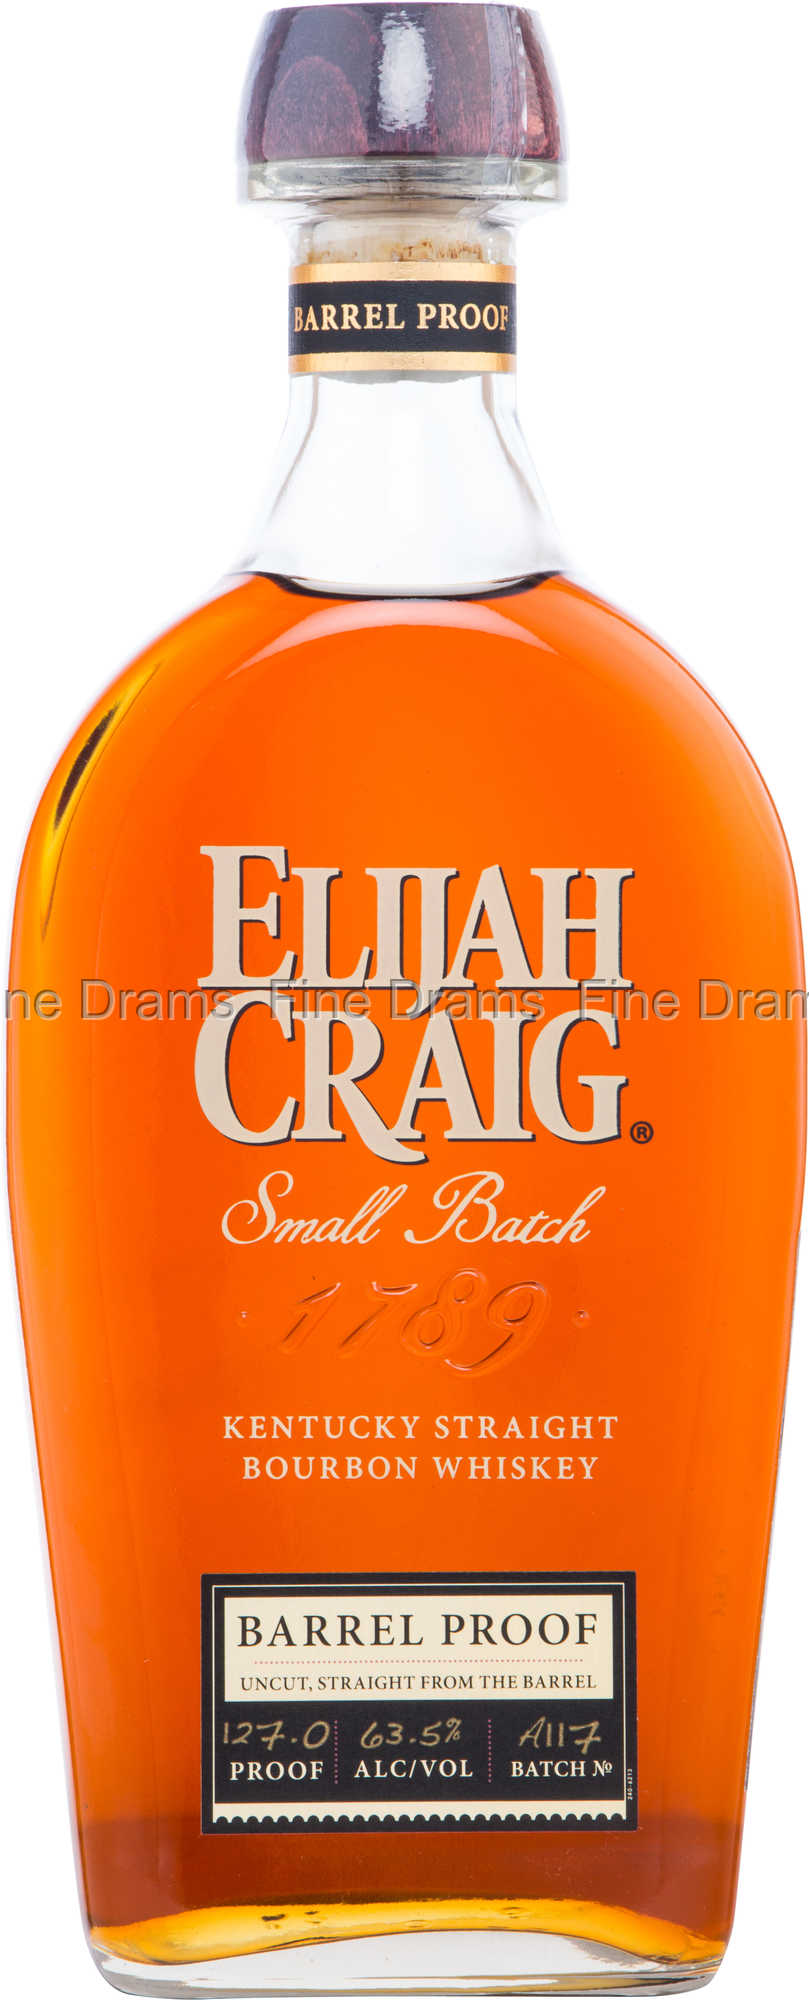 Elijah Craig 12 Year Old Barrel Proof Bourbon Whisky (63.5%)